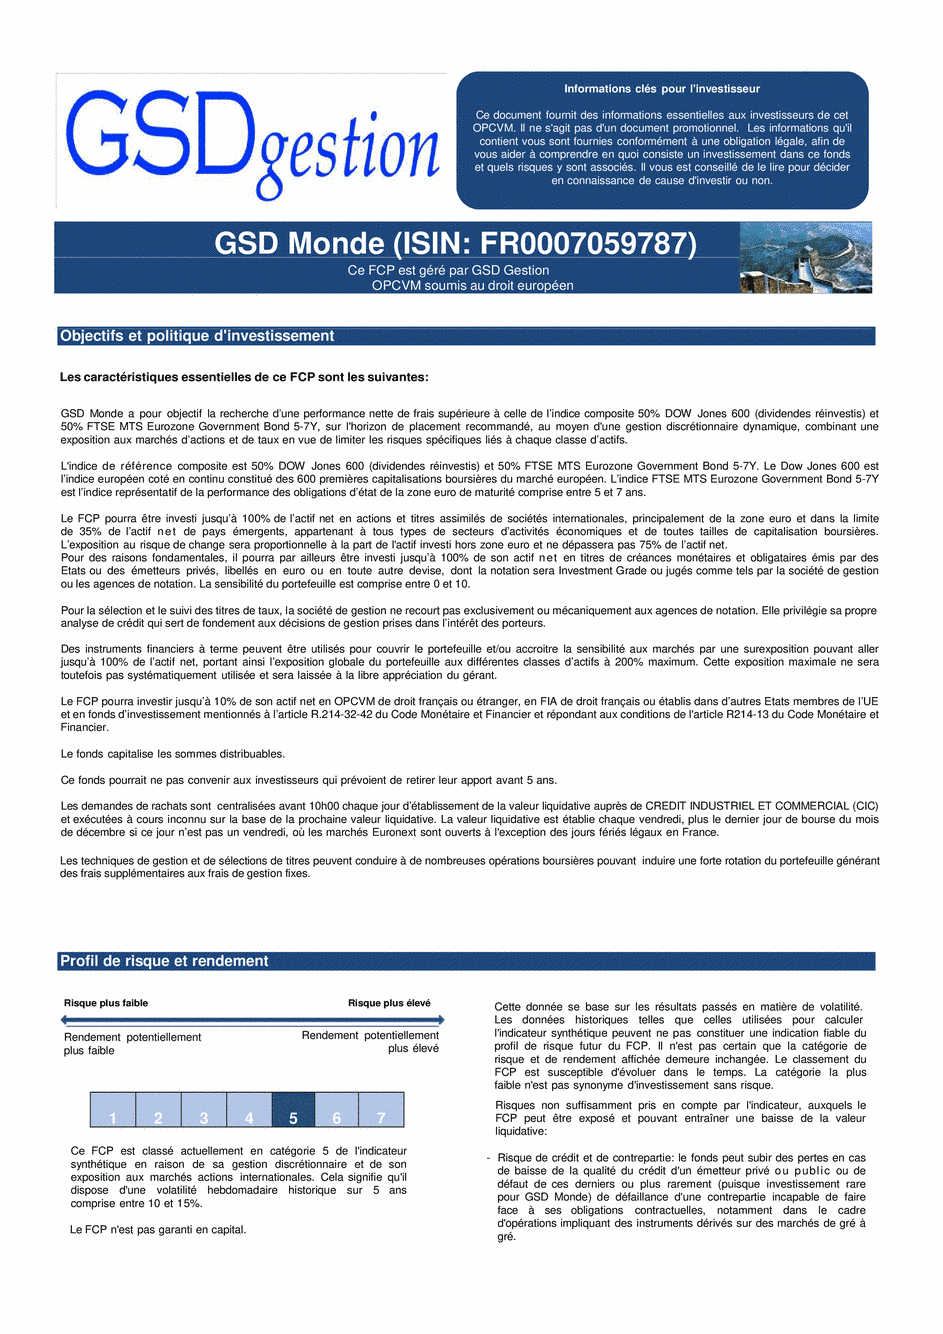 DICI-Prospectus GSD Monde - 01/04/2019 - Français